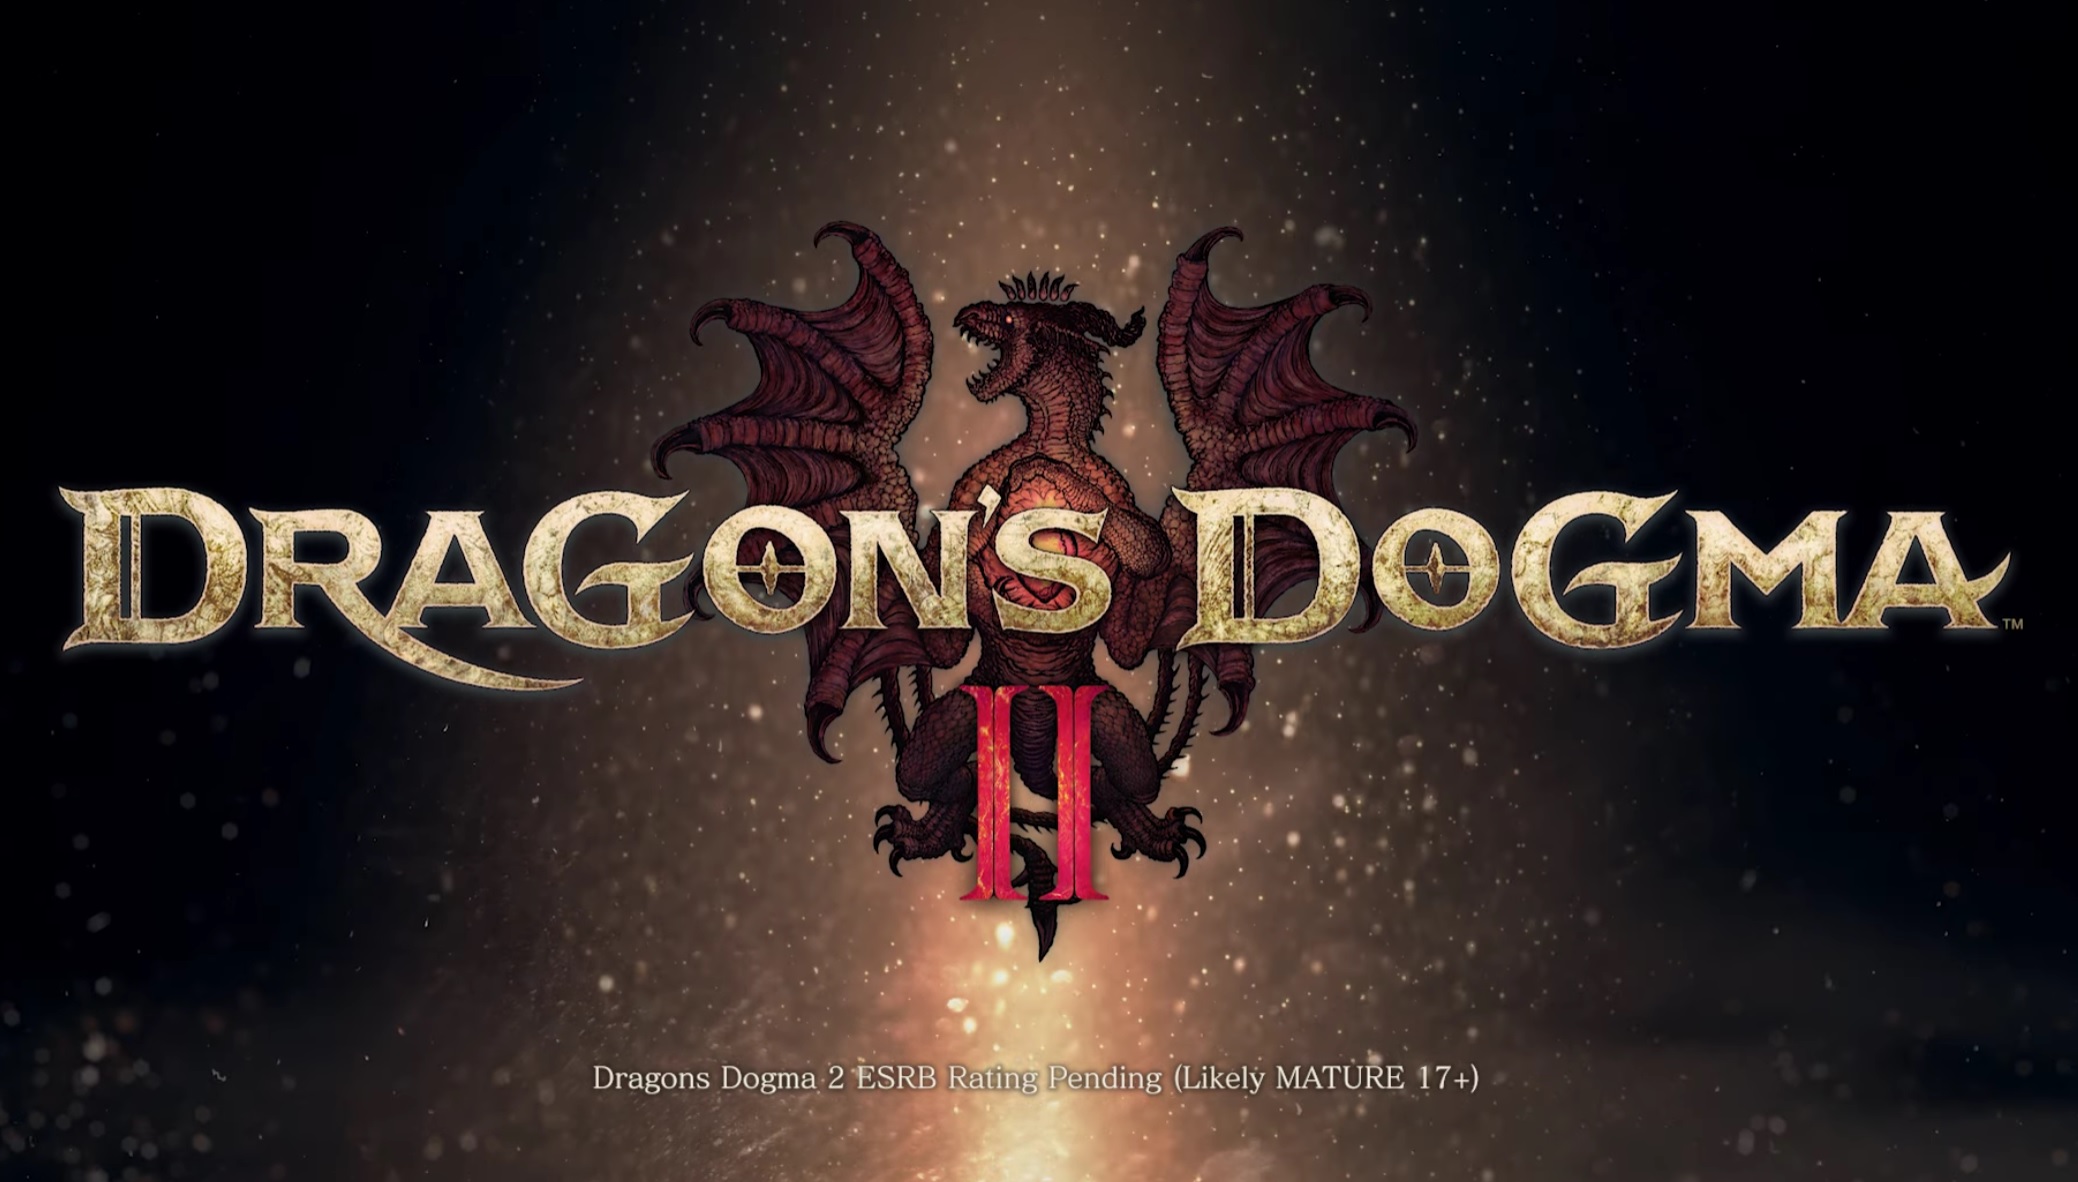  Dragon's Dogma - Xbox 360 : Capcom U S A Inc